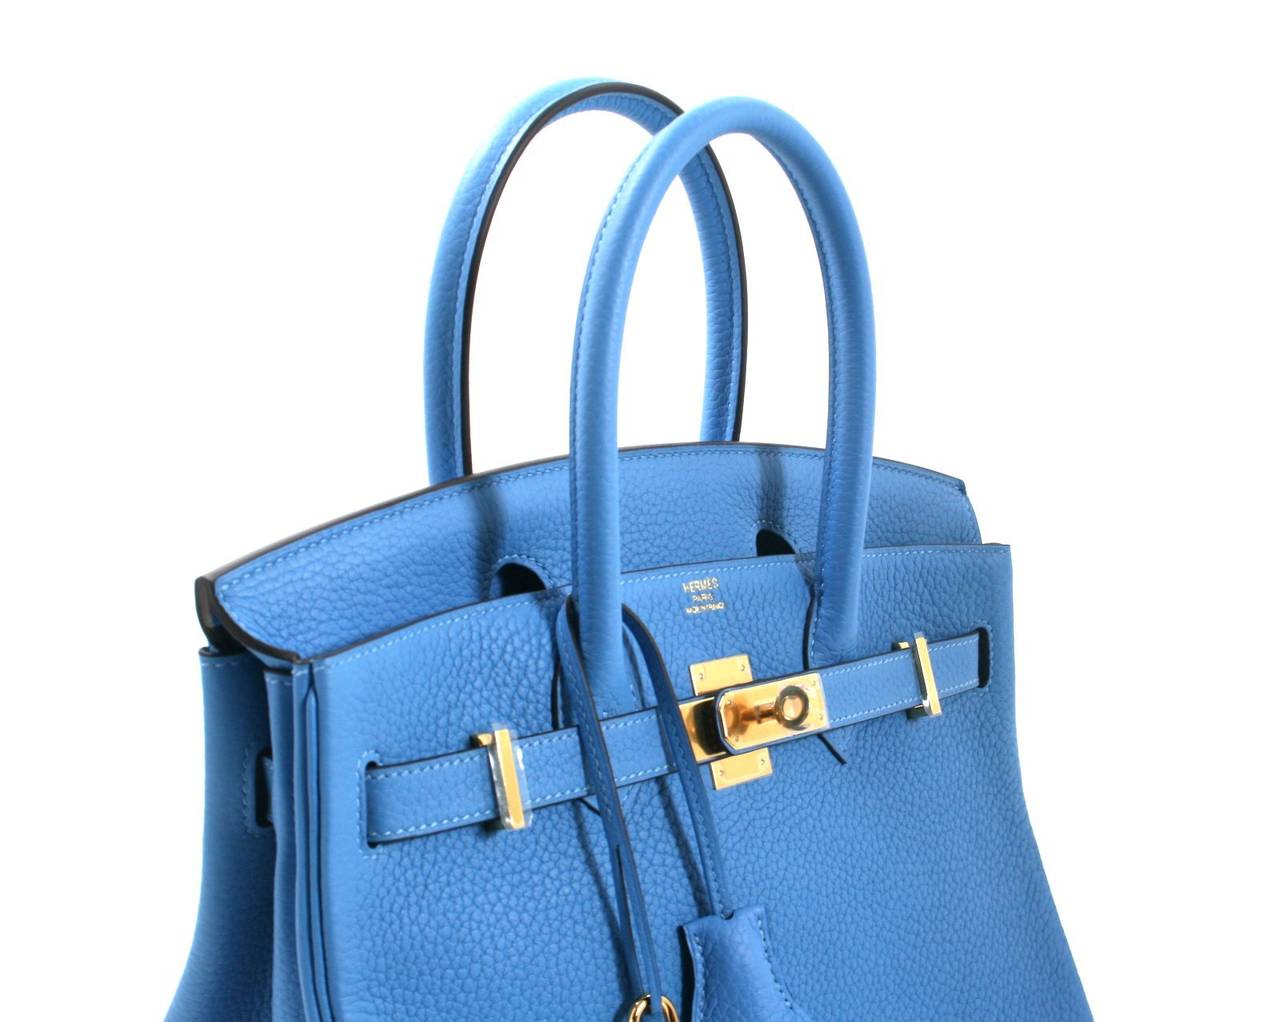 Hermès 30 cm Bleu Paradis Clemence Birkin Bag with GHW 2